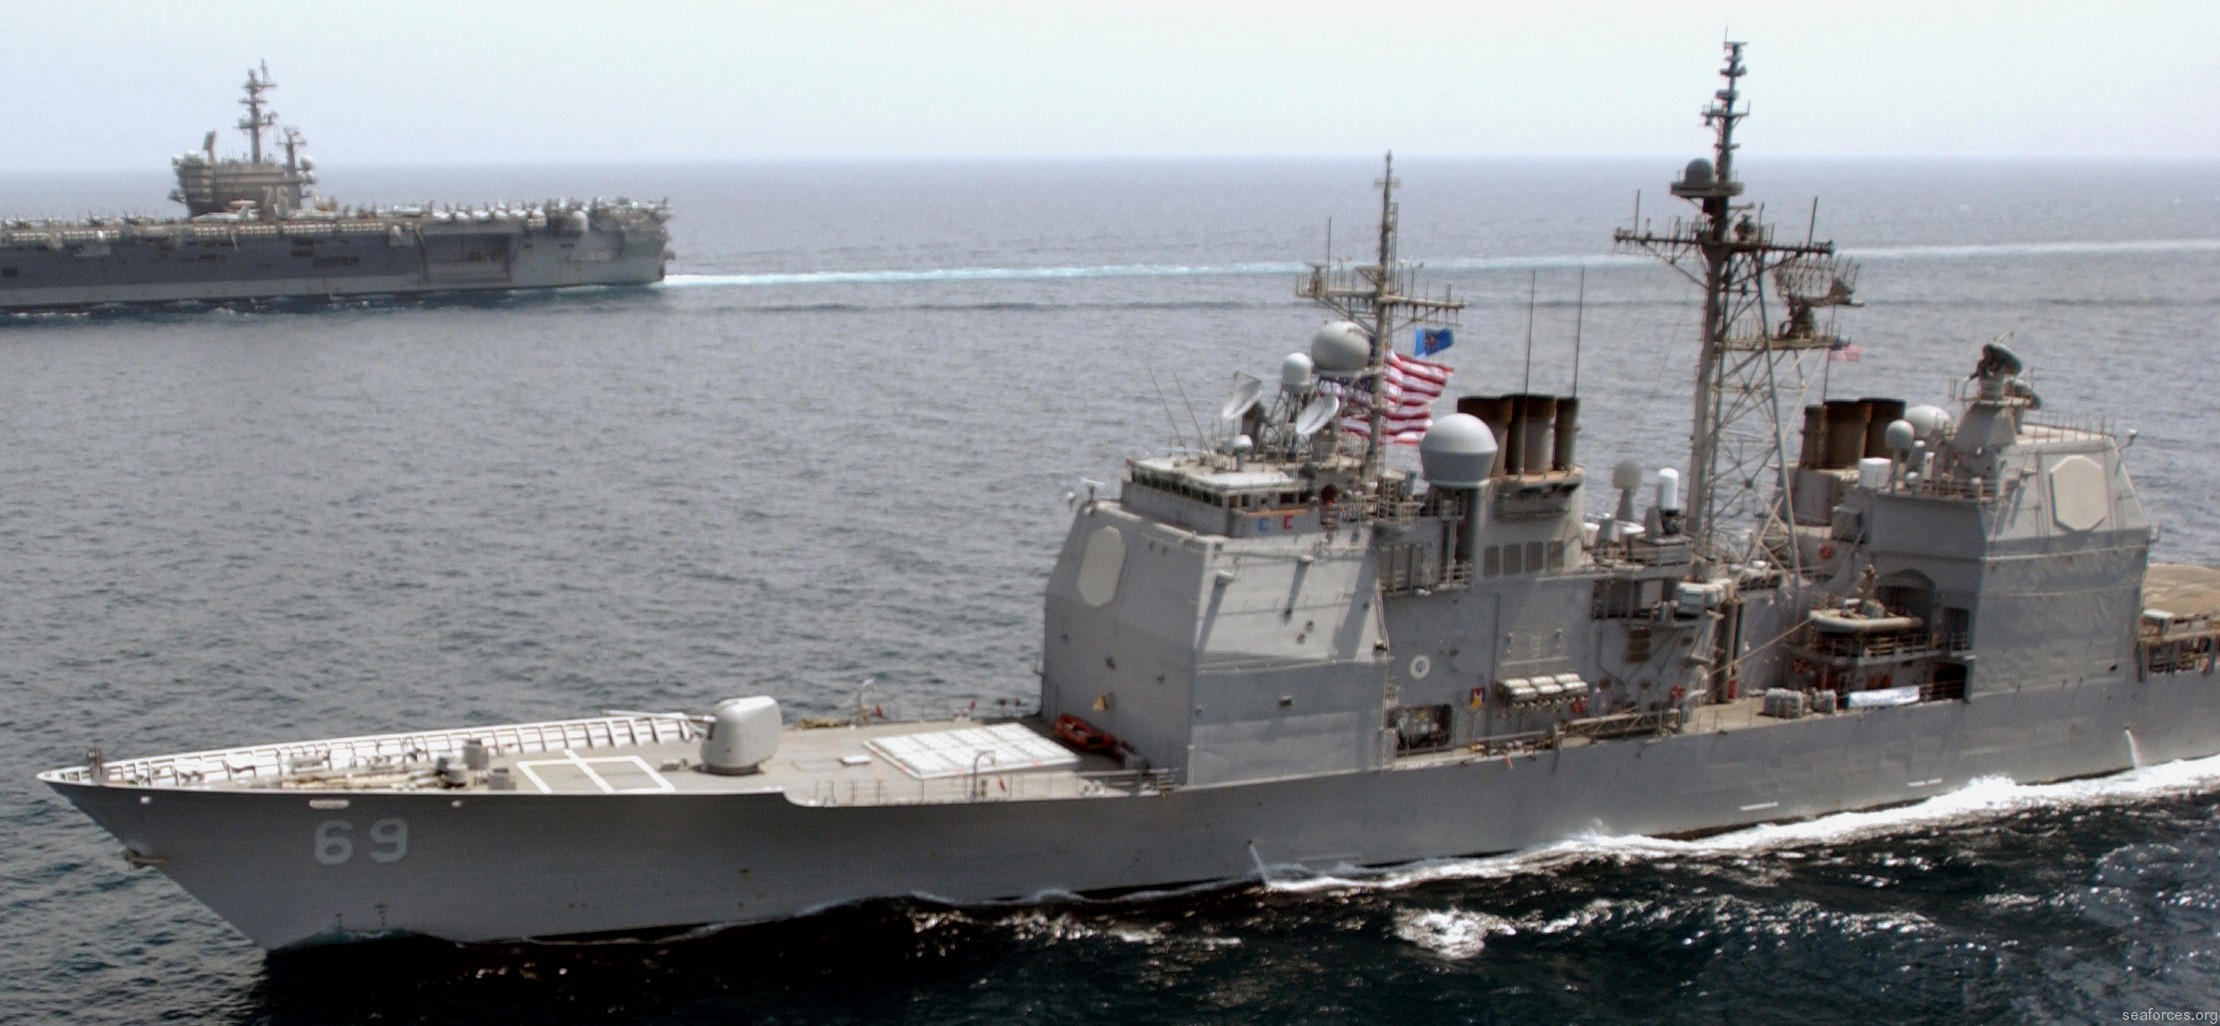 cg-69 uss vicksburg ticonderoga class guided missile cruiser us navy 36 persian gulf